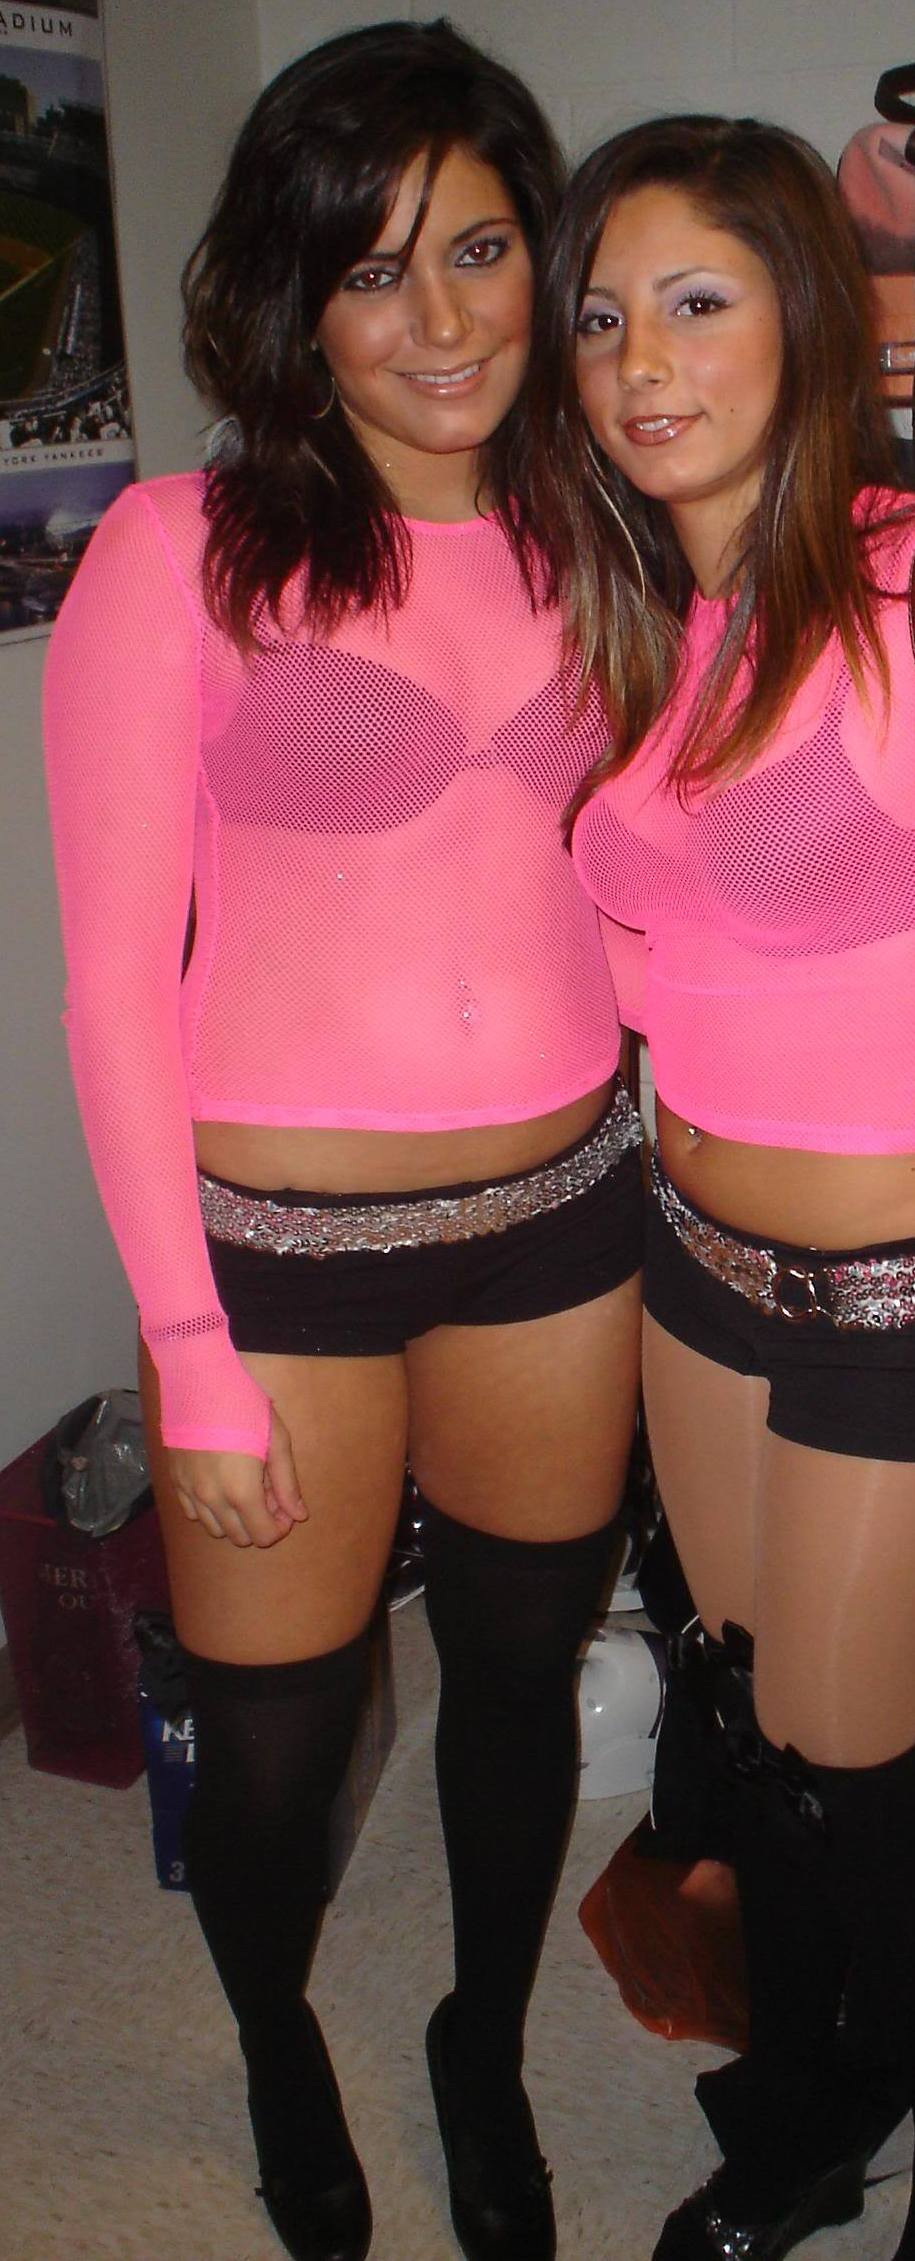 college sluts in pink lingerie